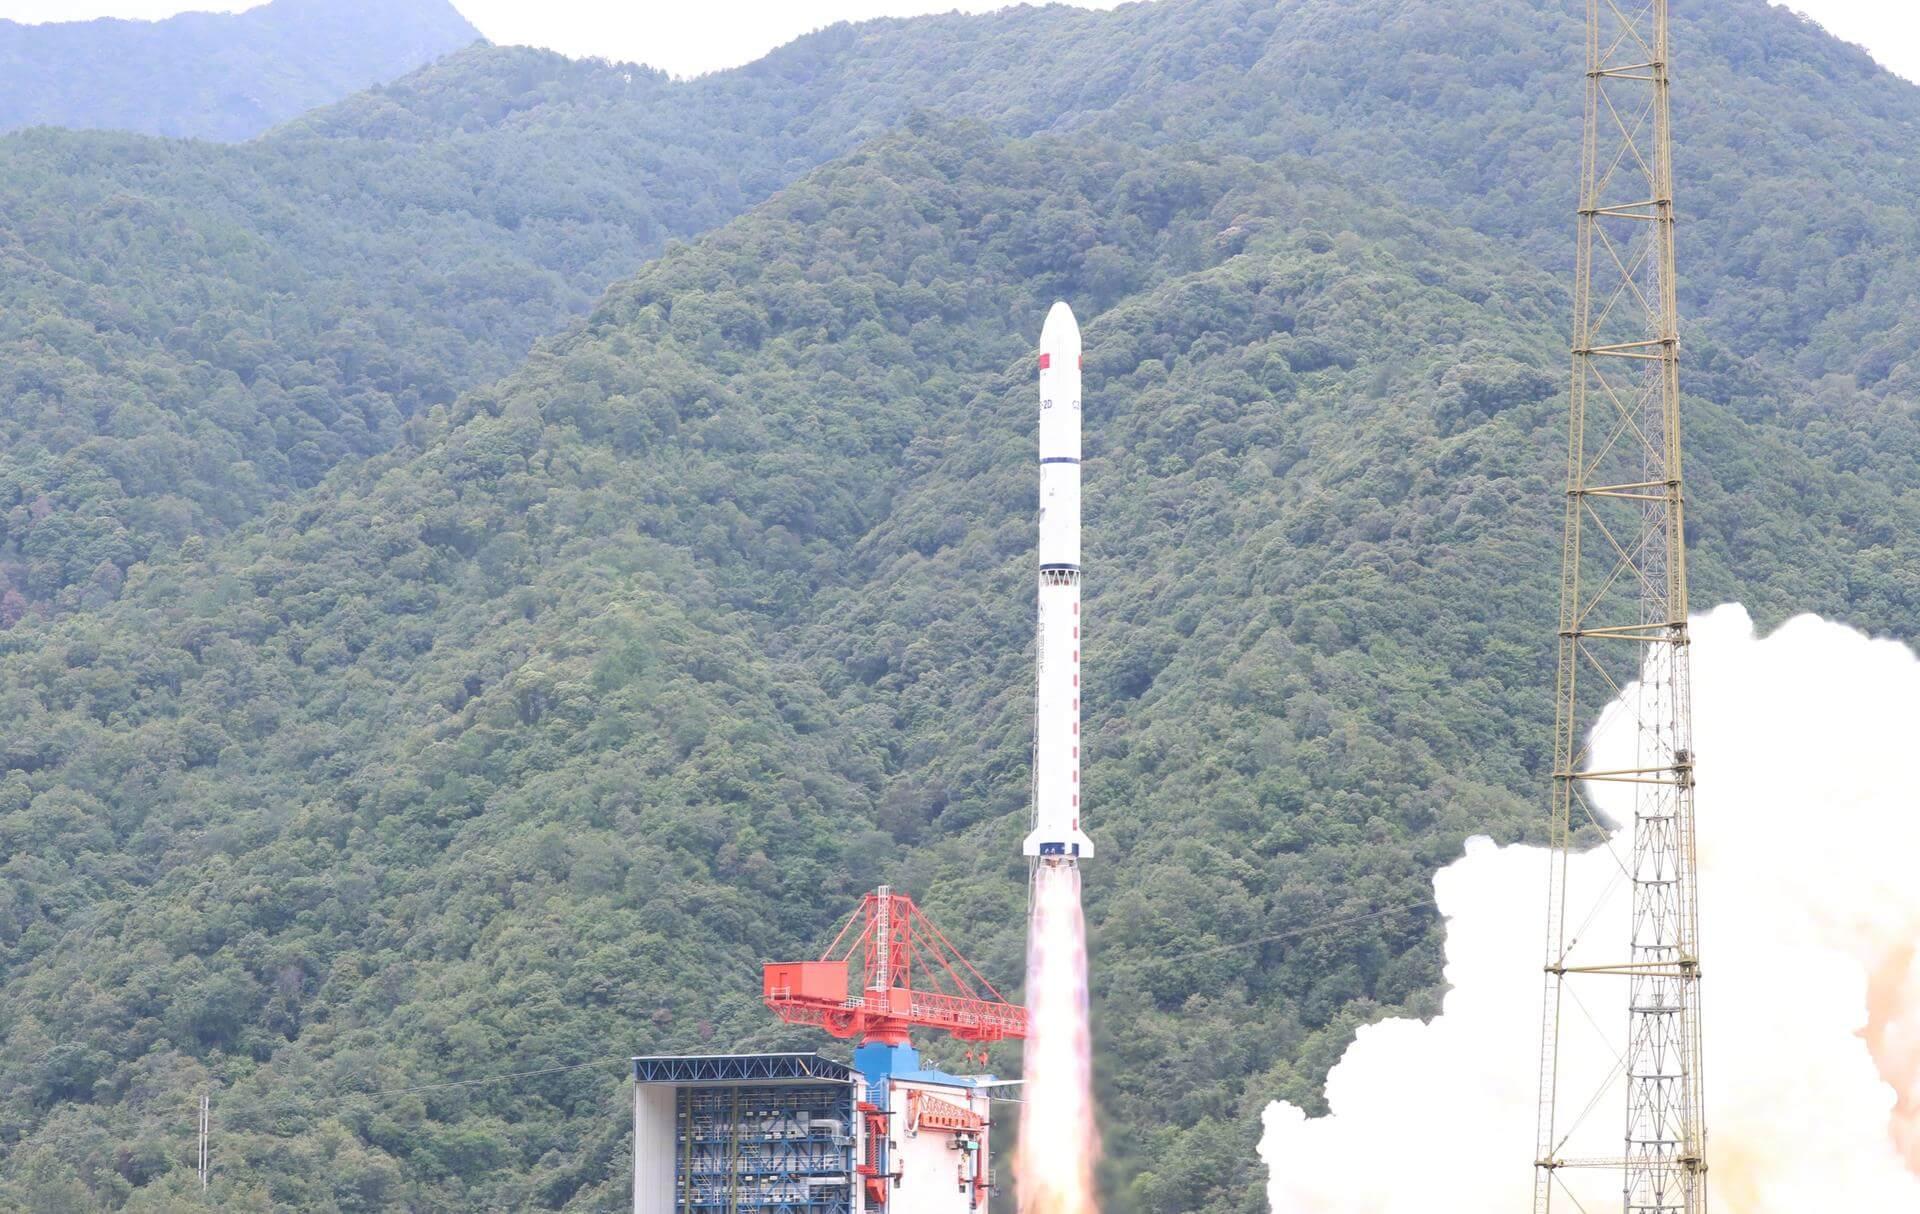 Launch Image